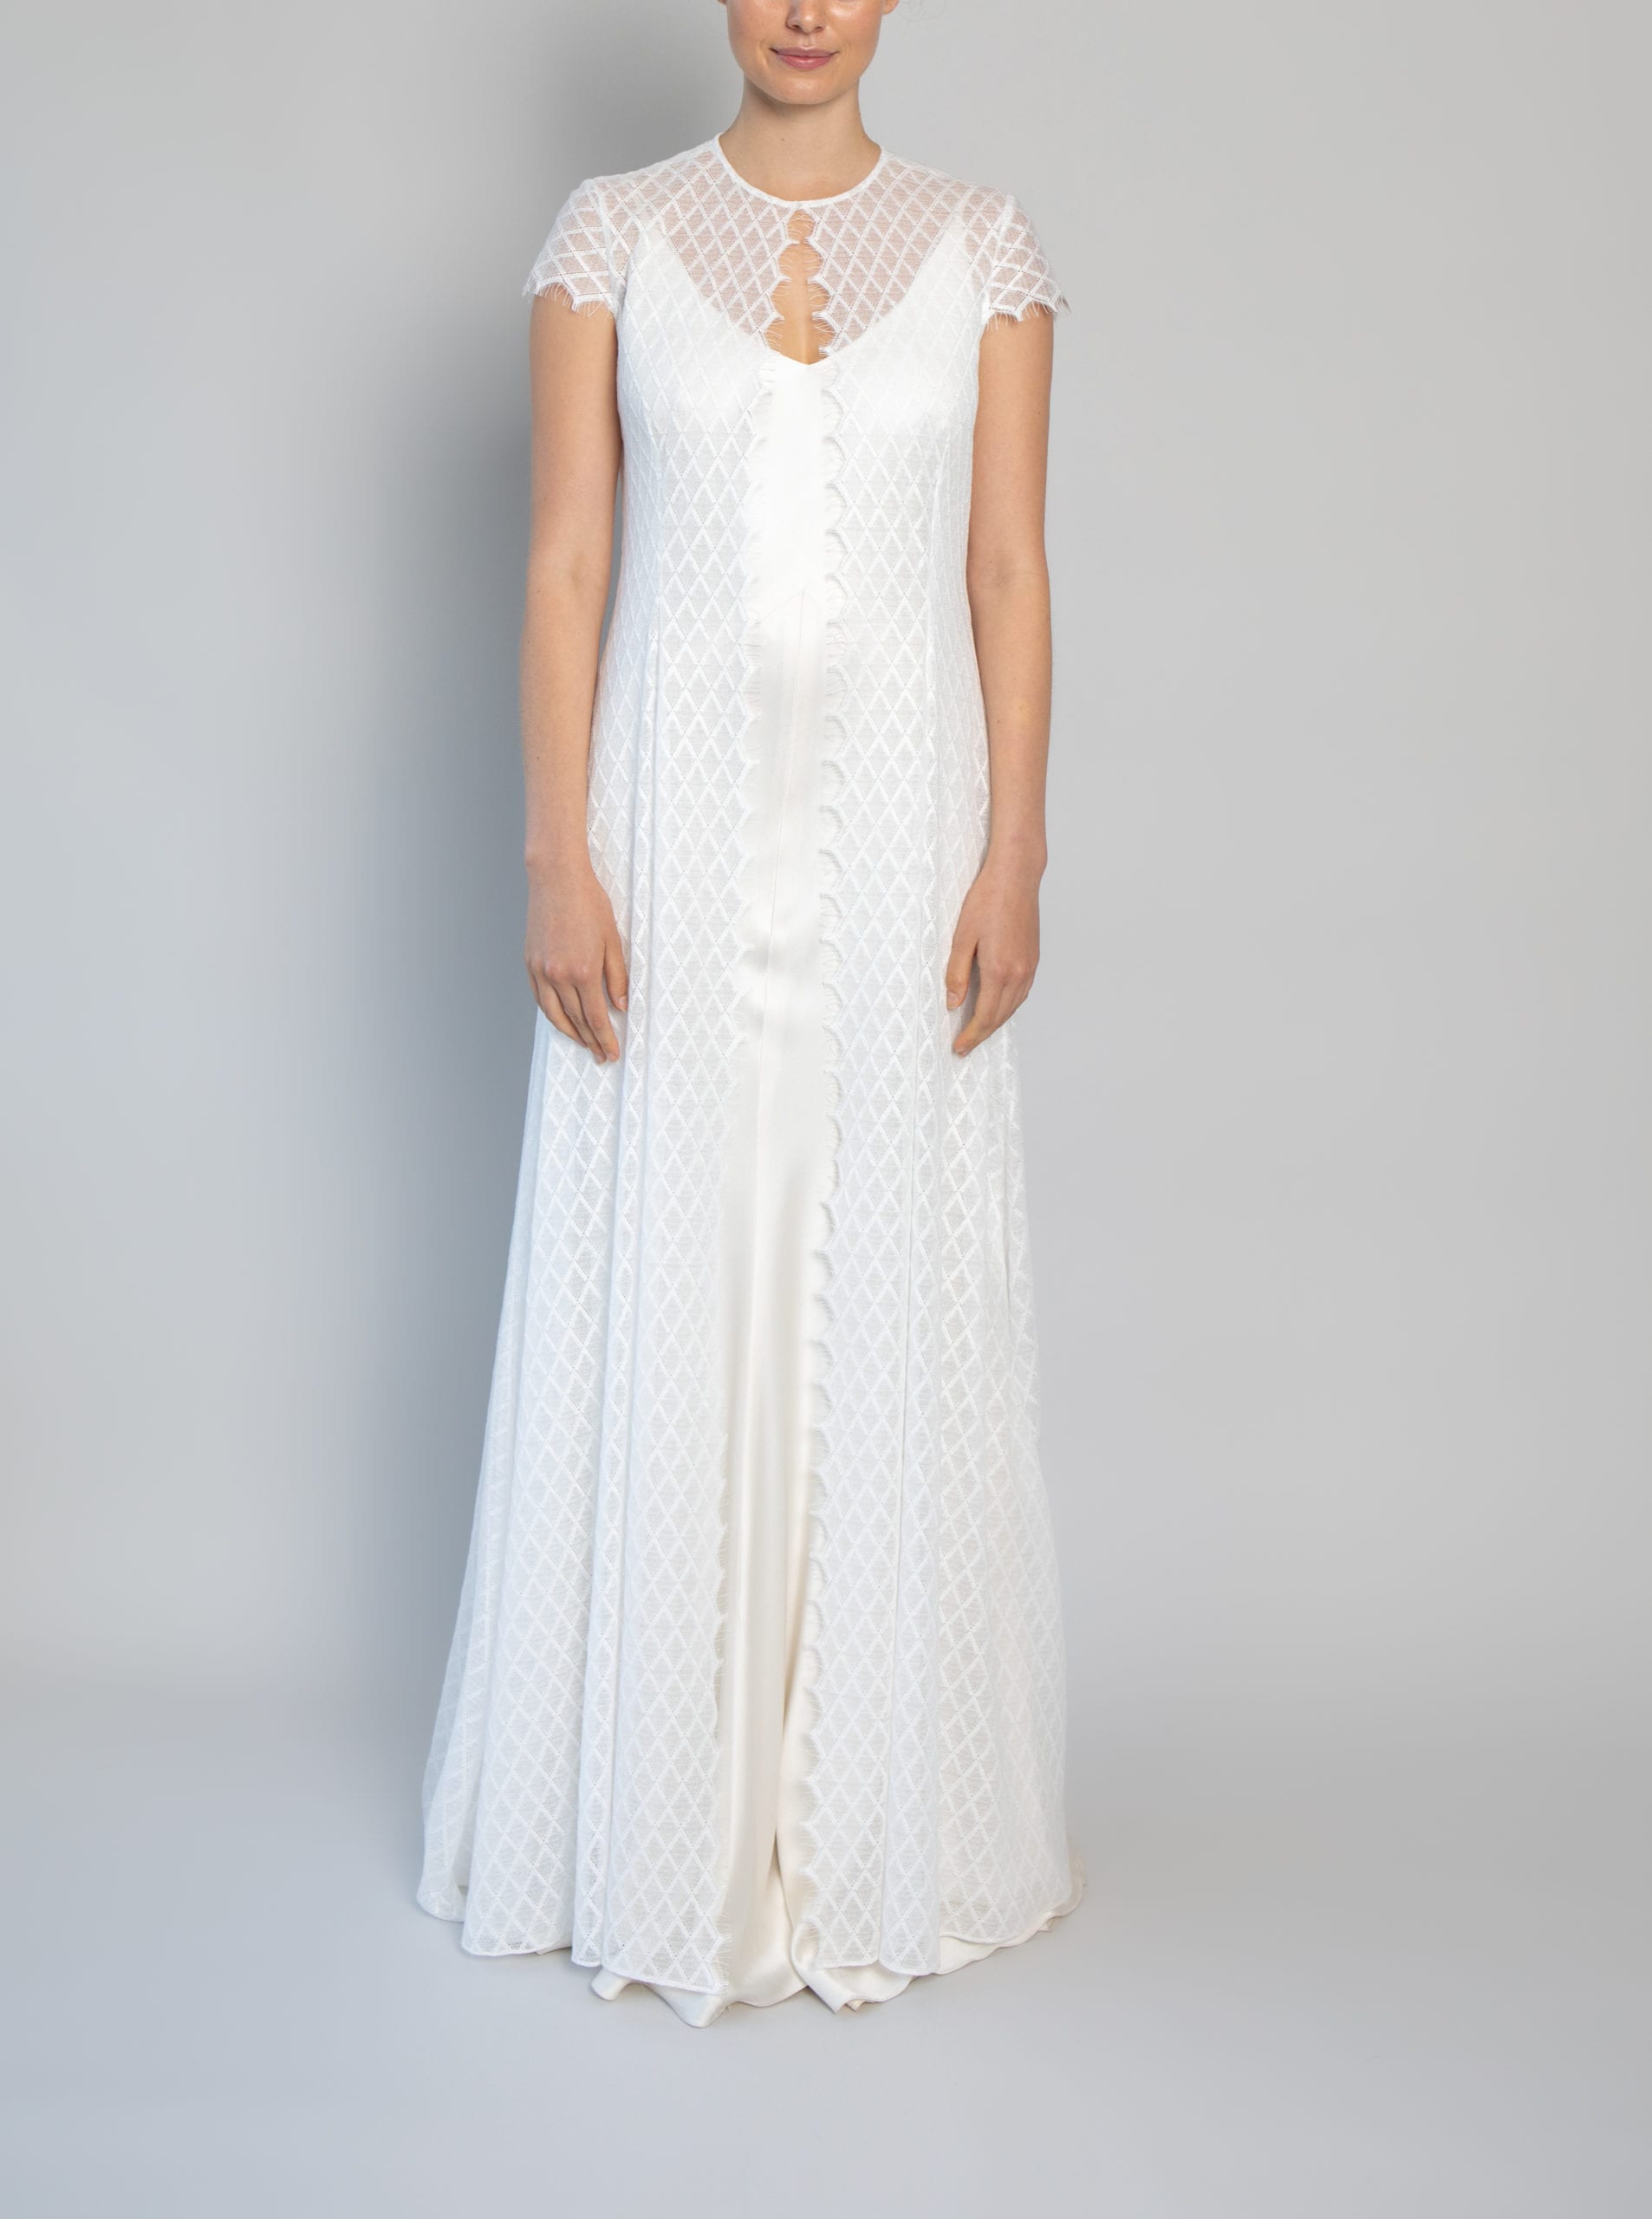 Andrea Hawkes Bridal Rebecca Modern Geometric Lace Wedding Veil